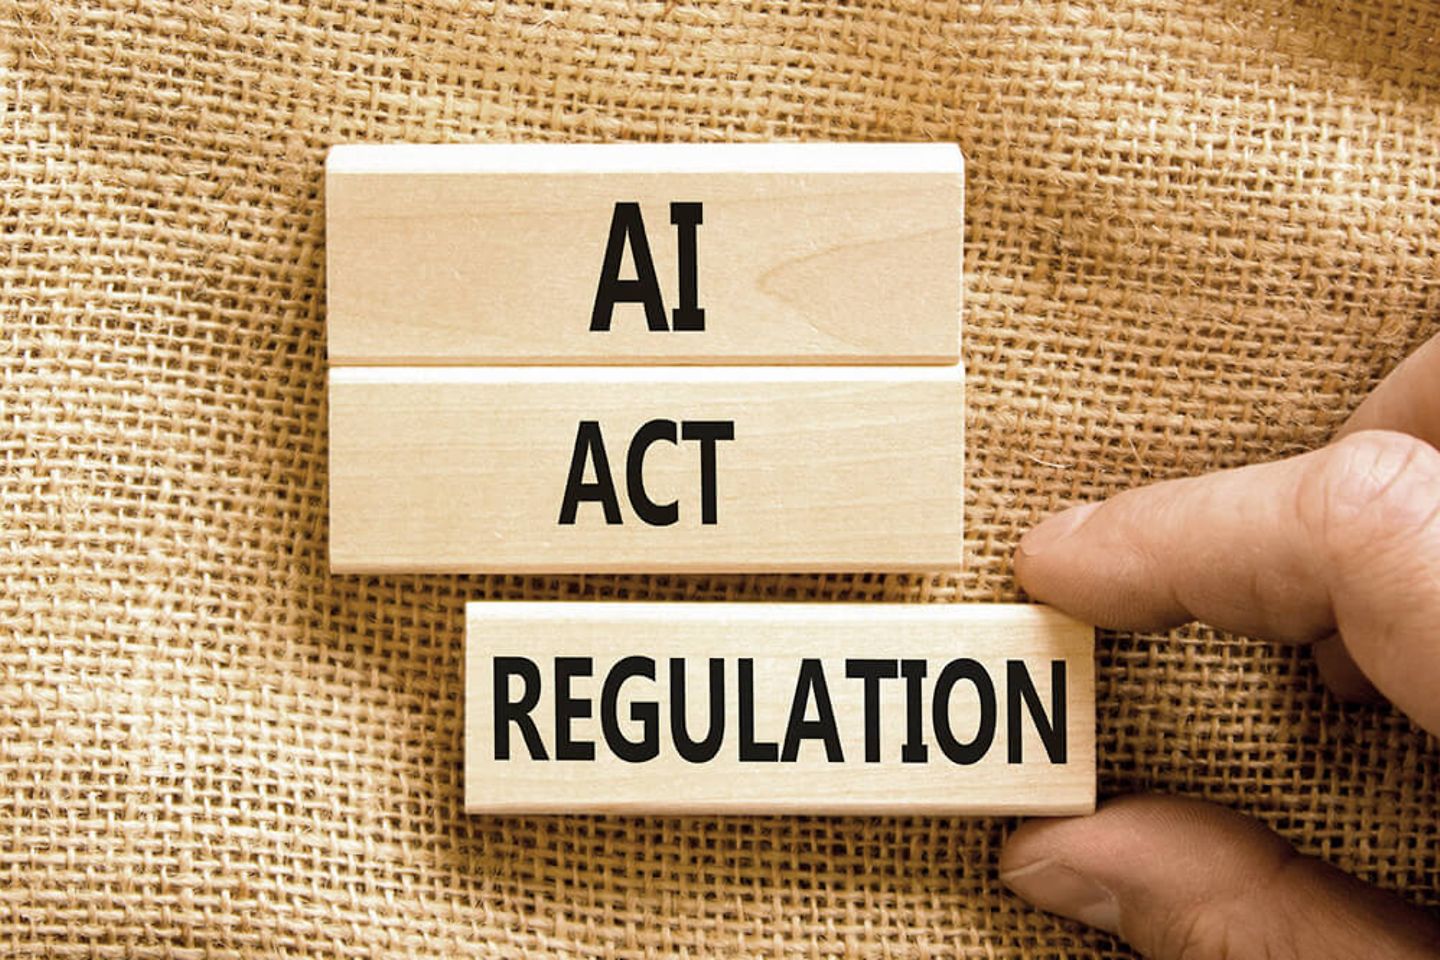 AI act regulation symbol